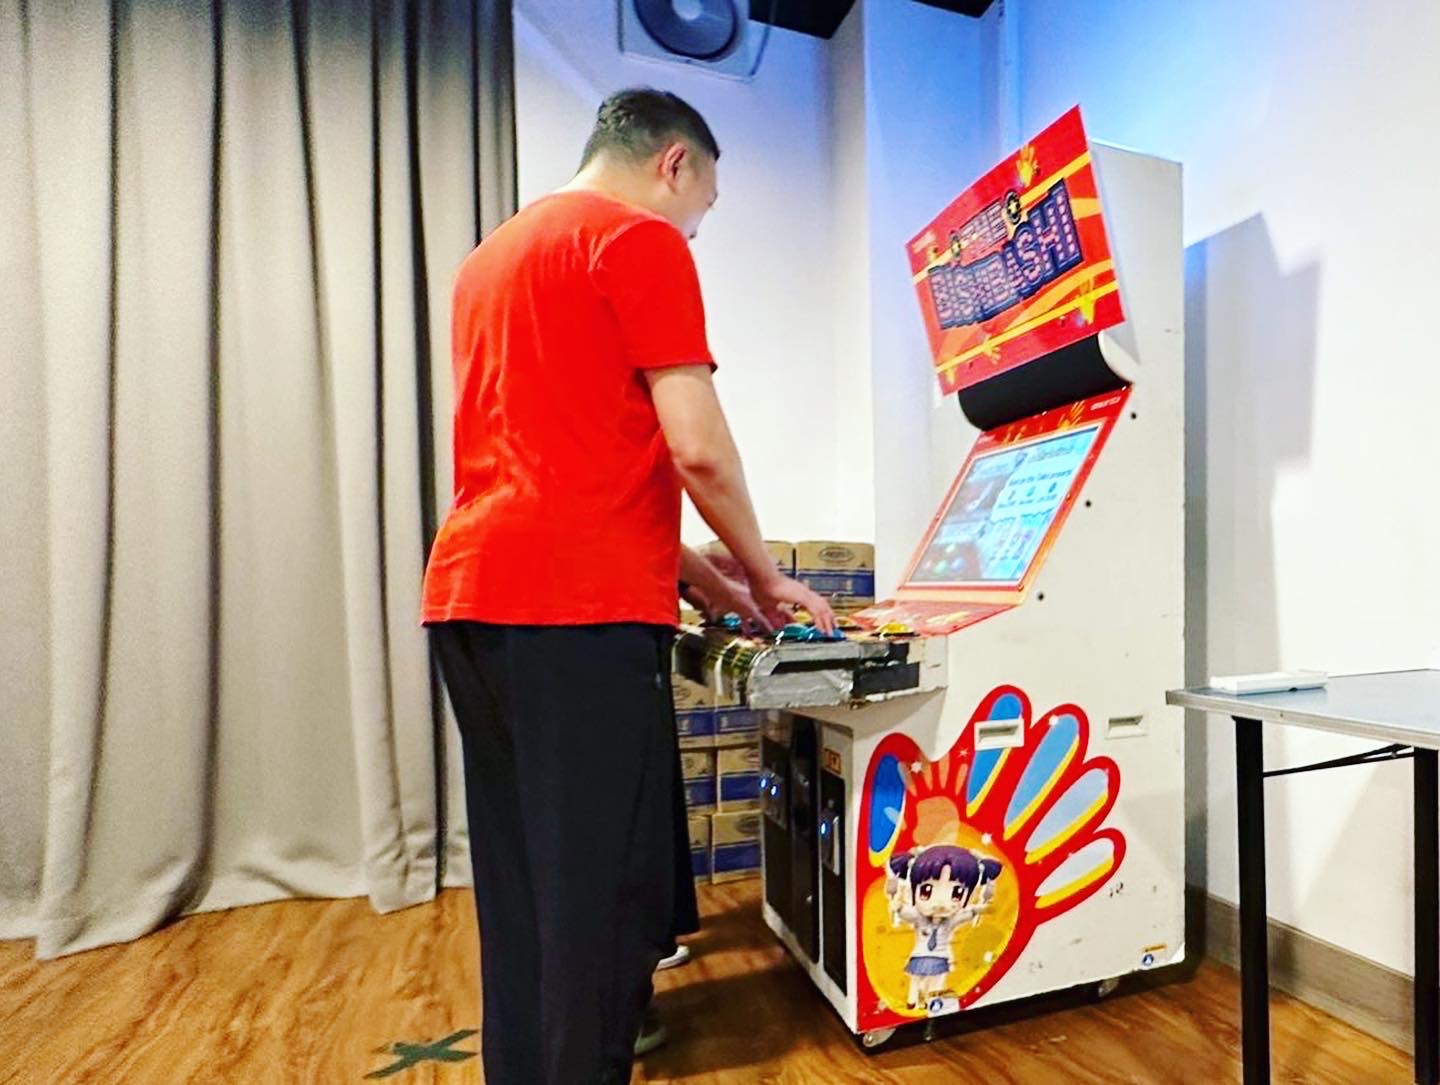 bishibashi arcade machine fun for events